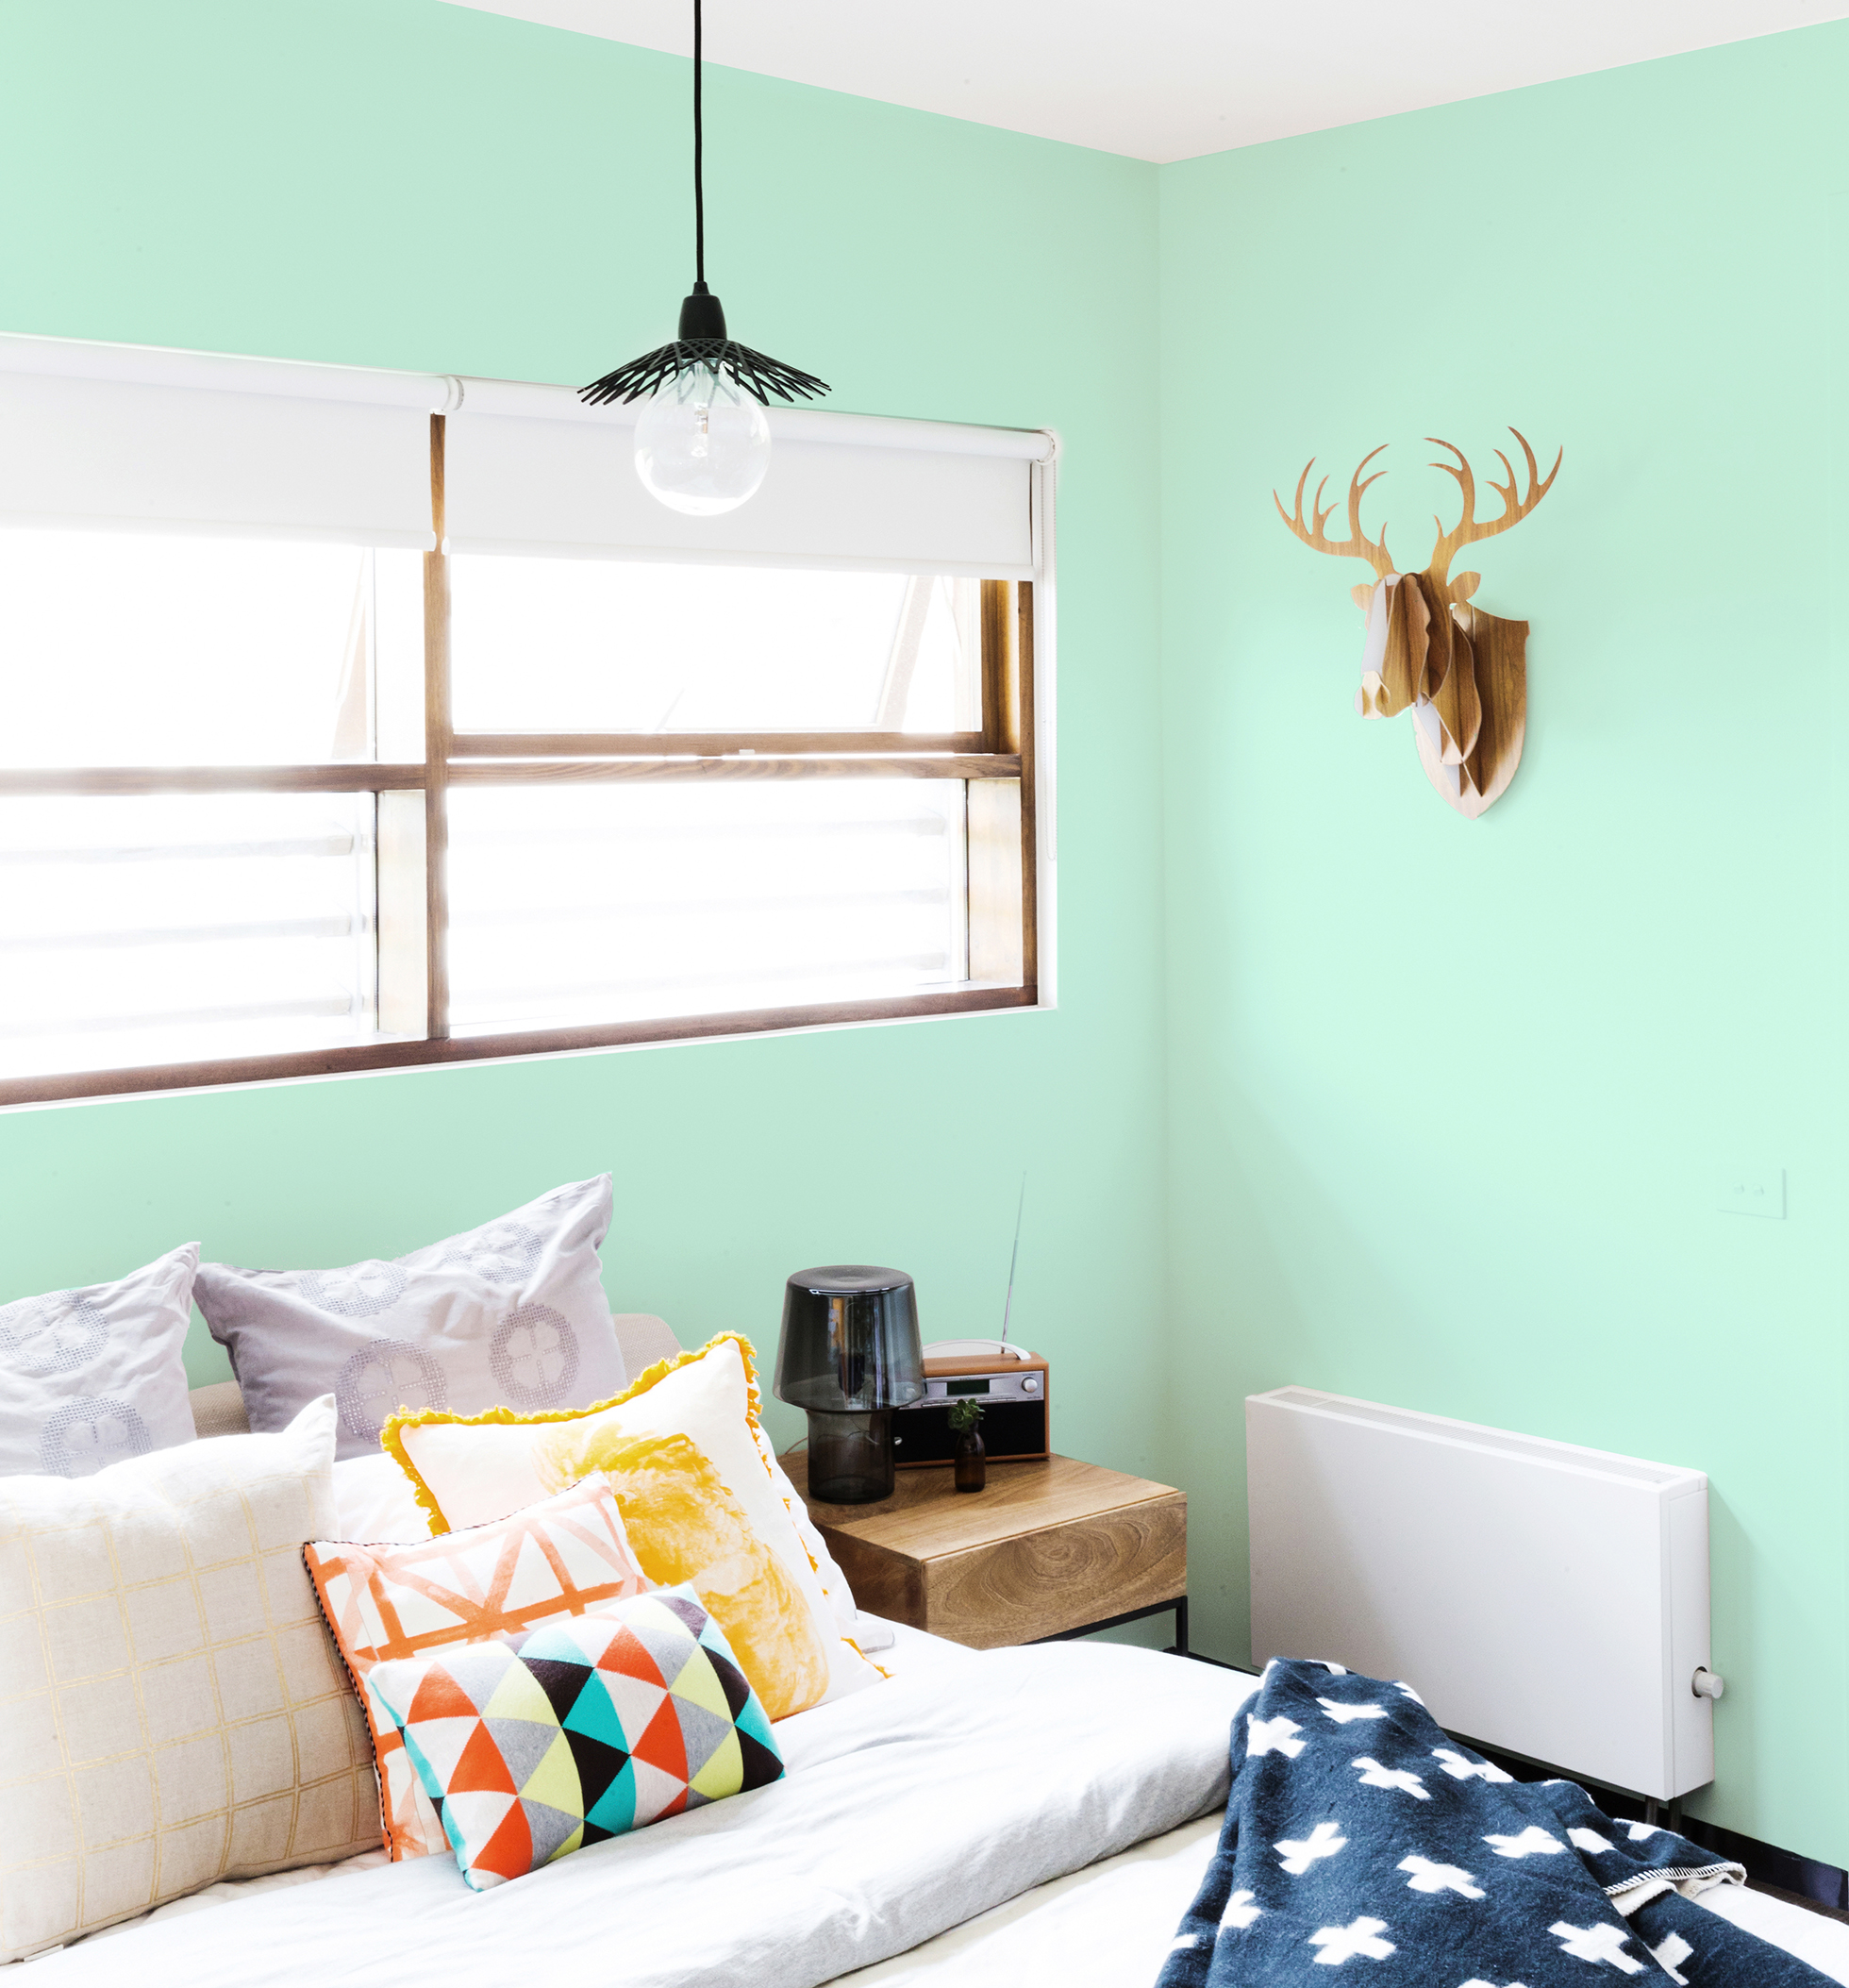 Green bedroom with large window and cardboard deer head